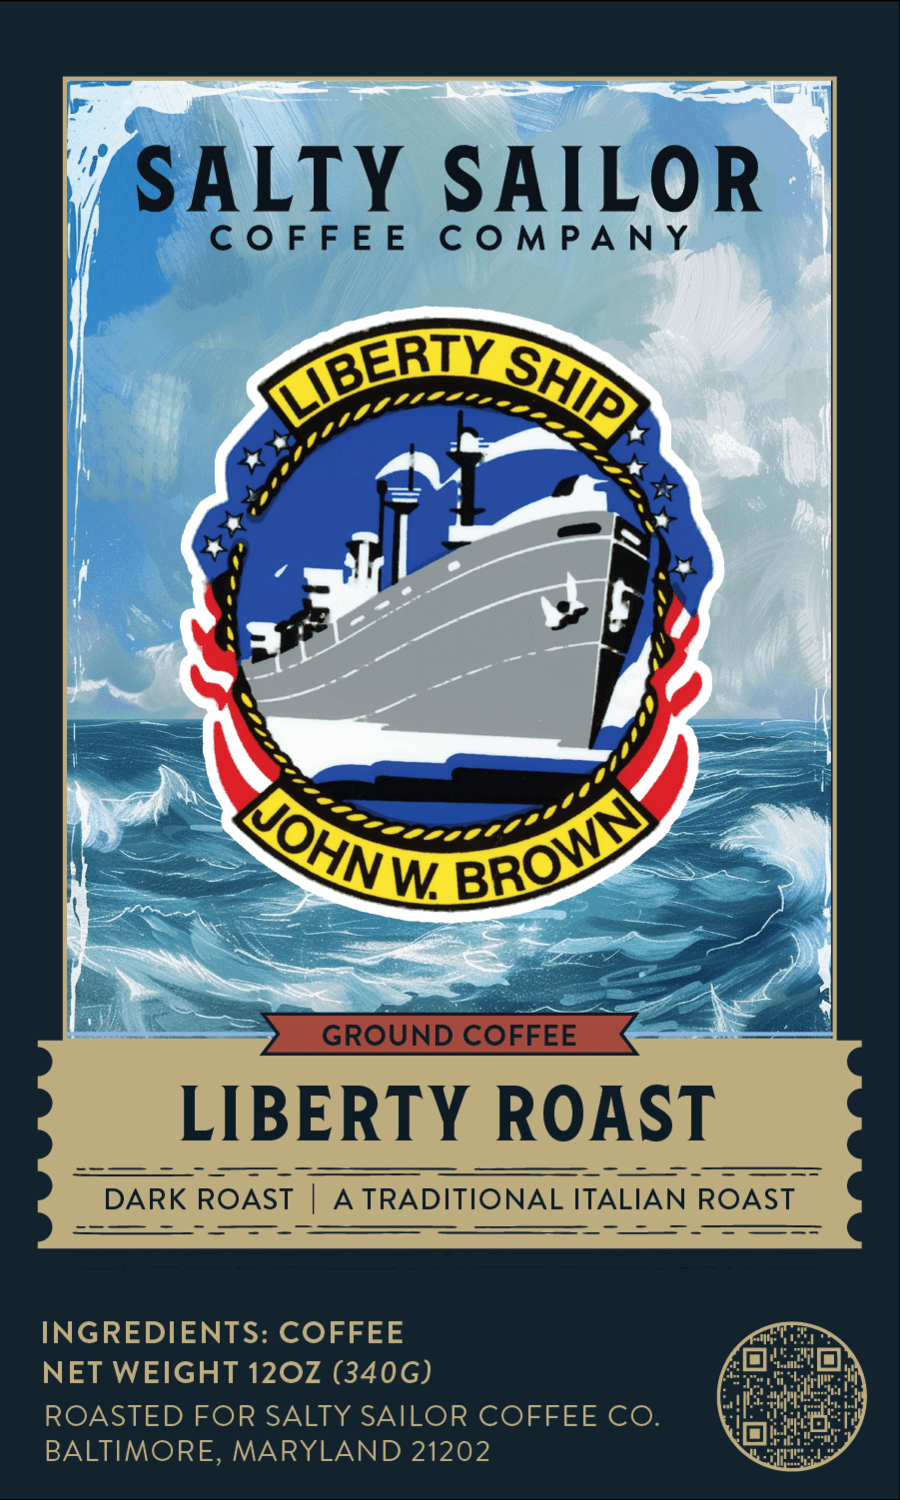 SS JOHN W BROWN Liberty Roast